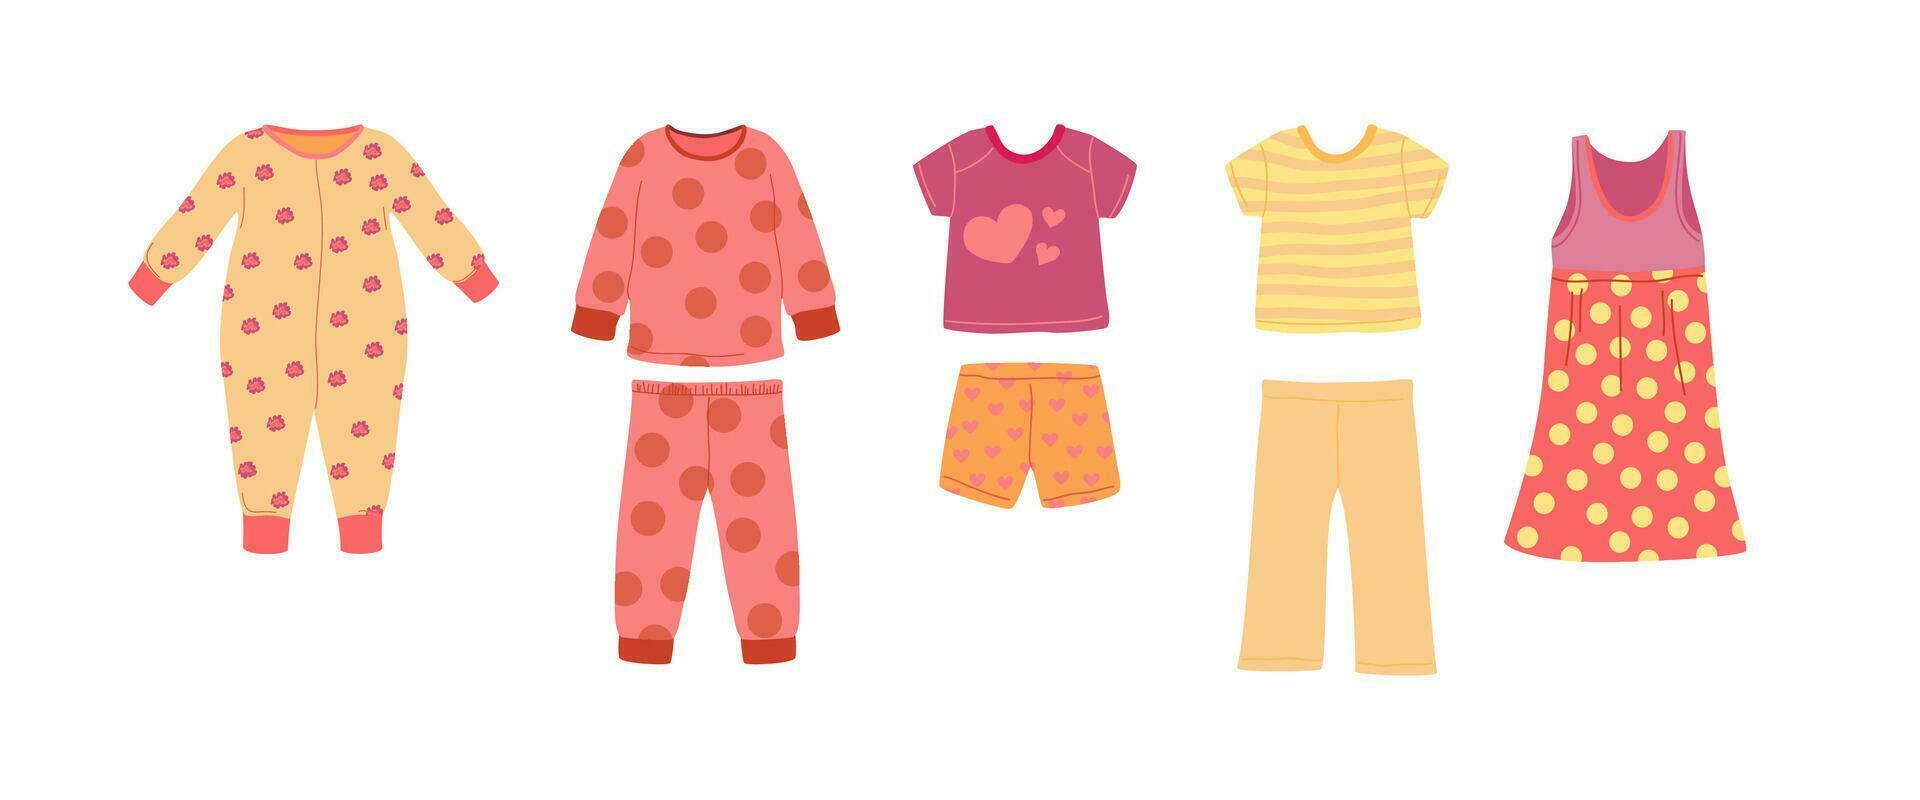 Cartoon Color Different Girl Pajamas Set. Vector